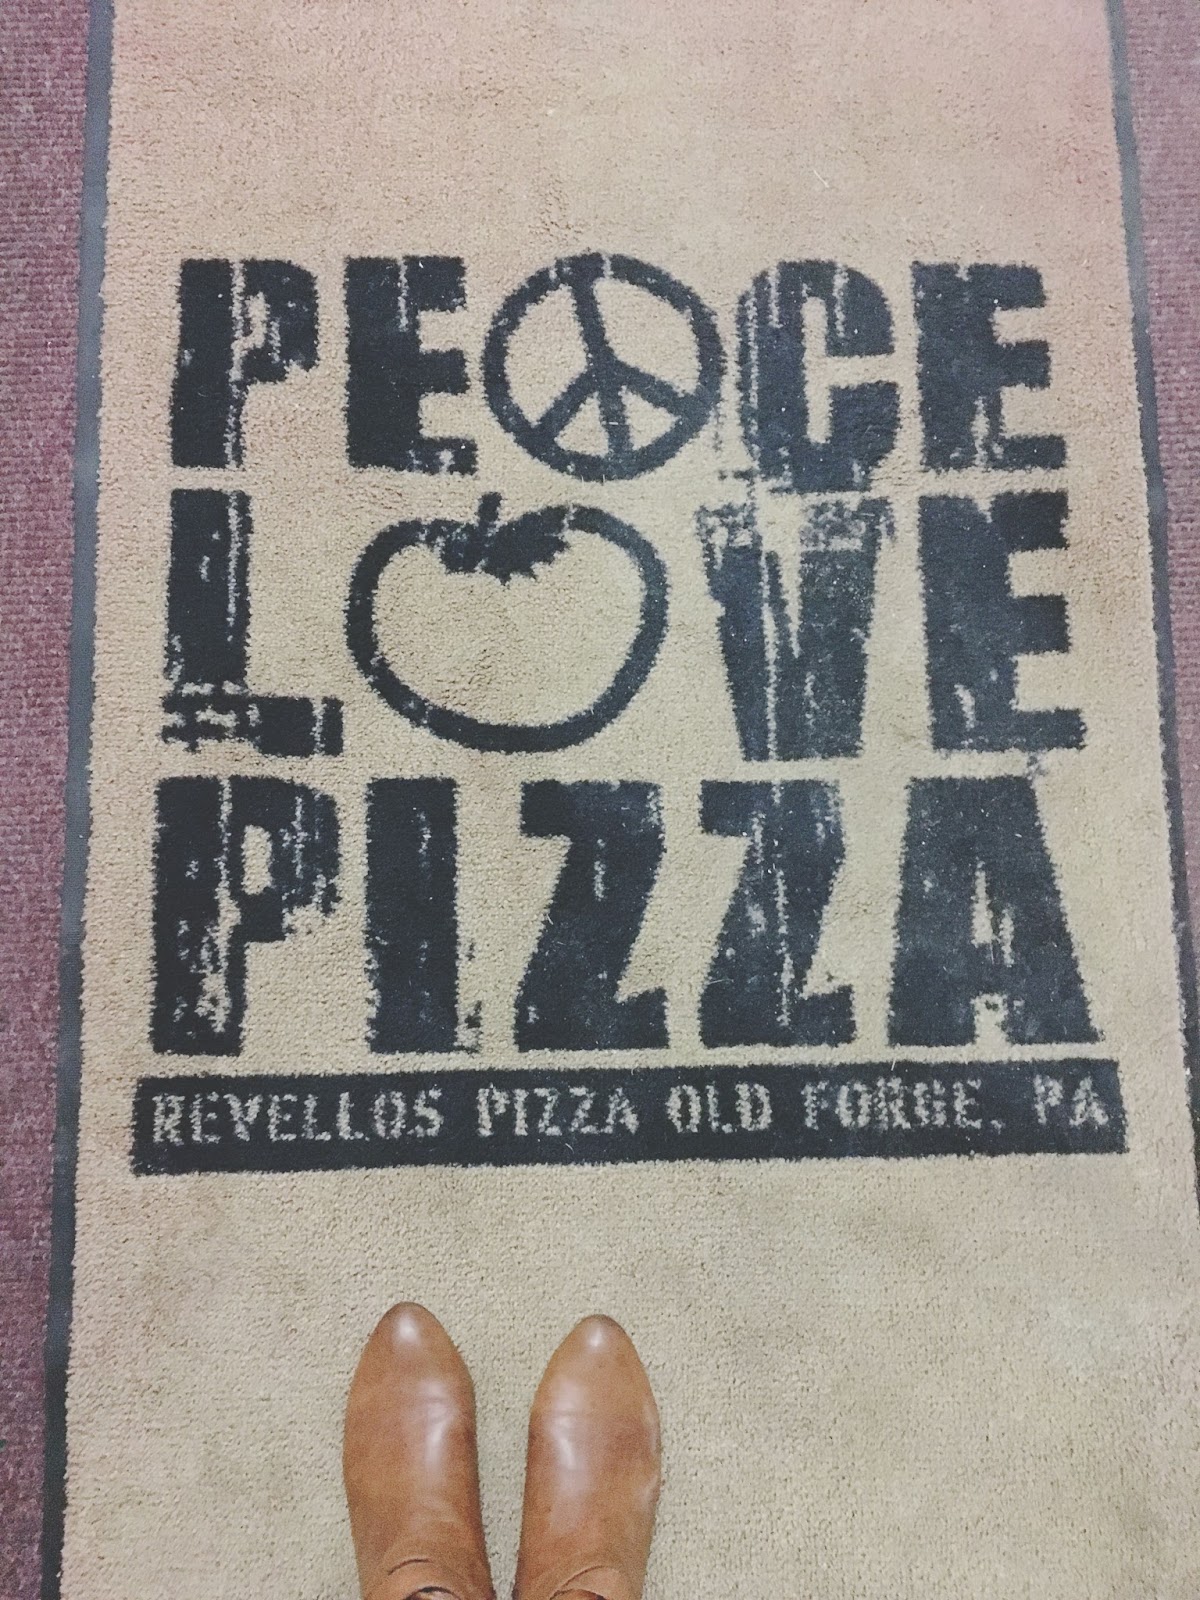 pizza near Scranton, Pennsylvania